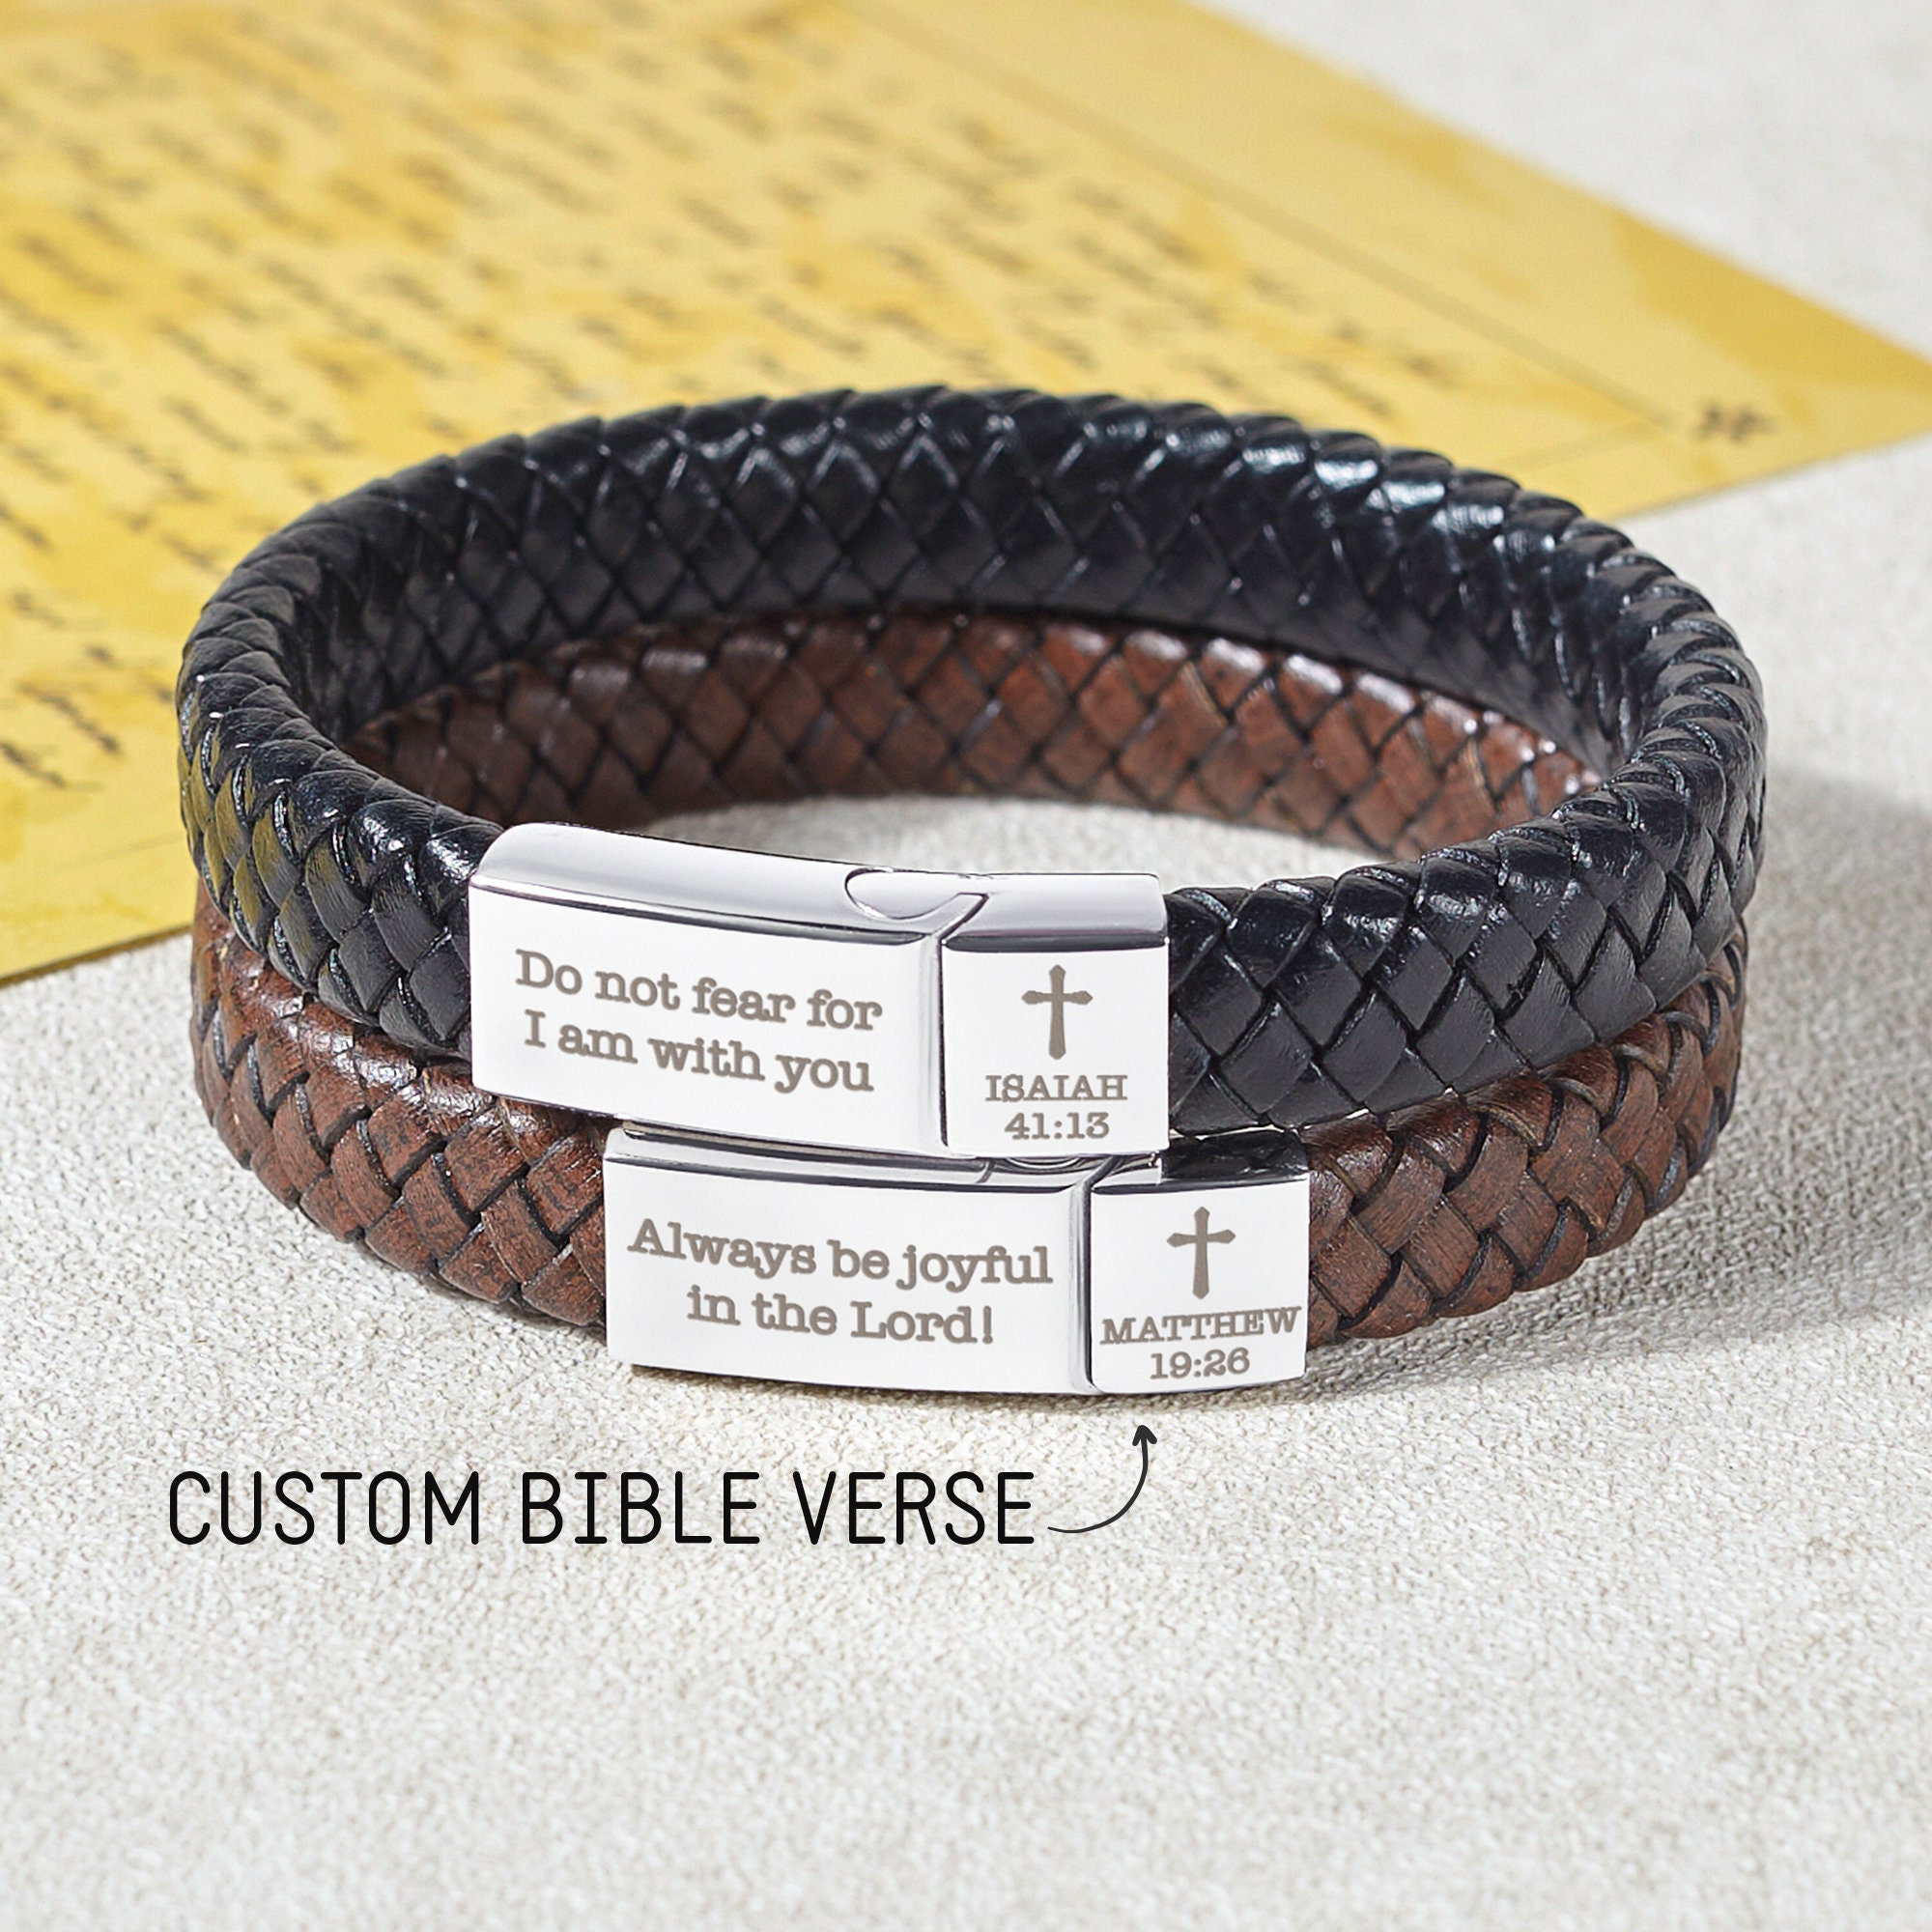 Stainless Steel Beads Bracelet w/ Bible Inside - Made in Israel